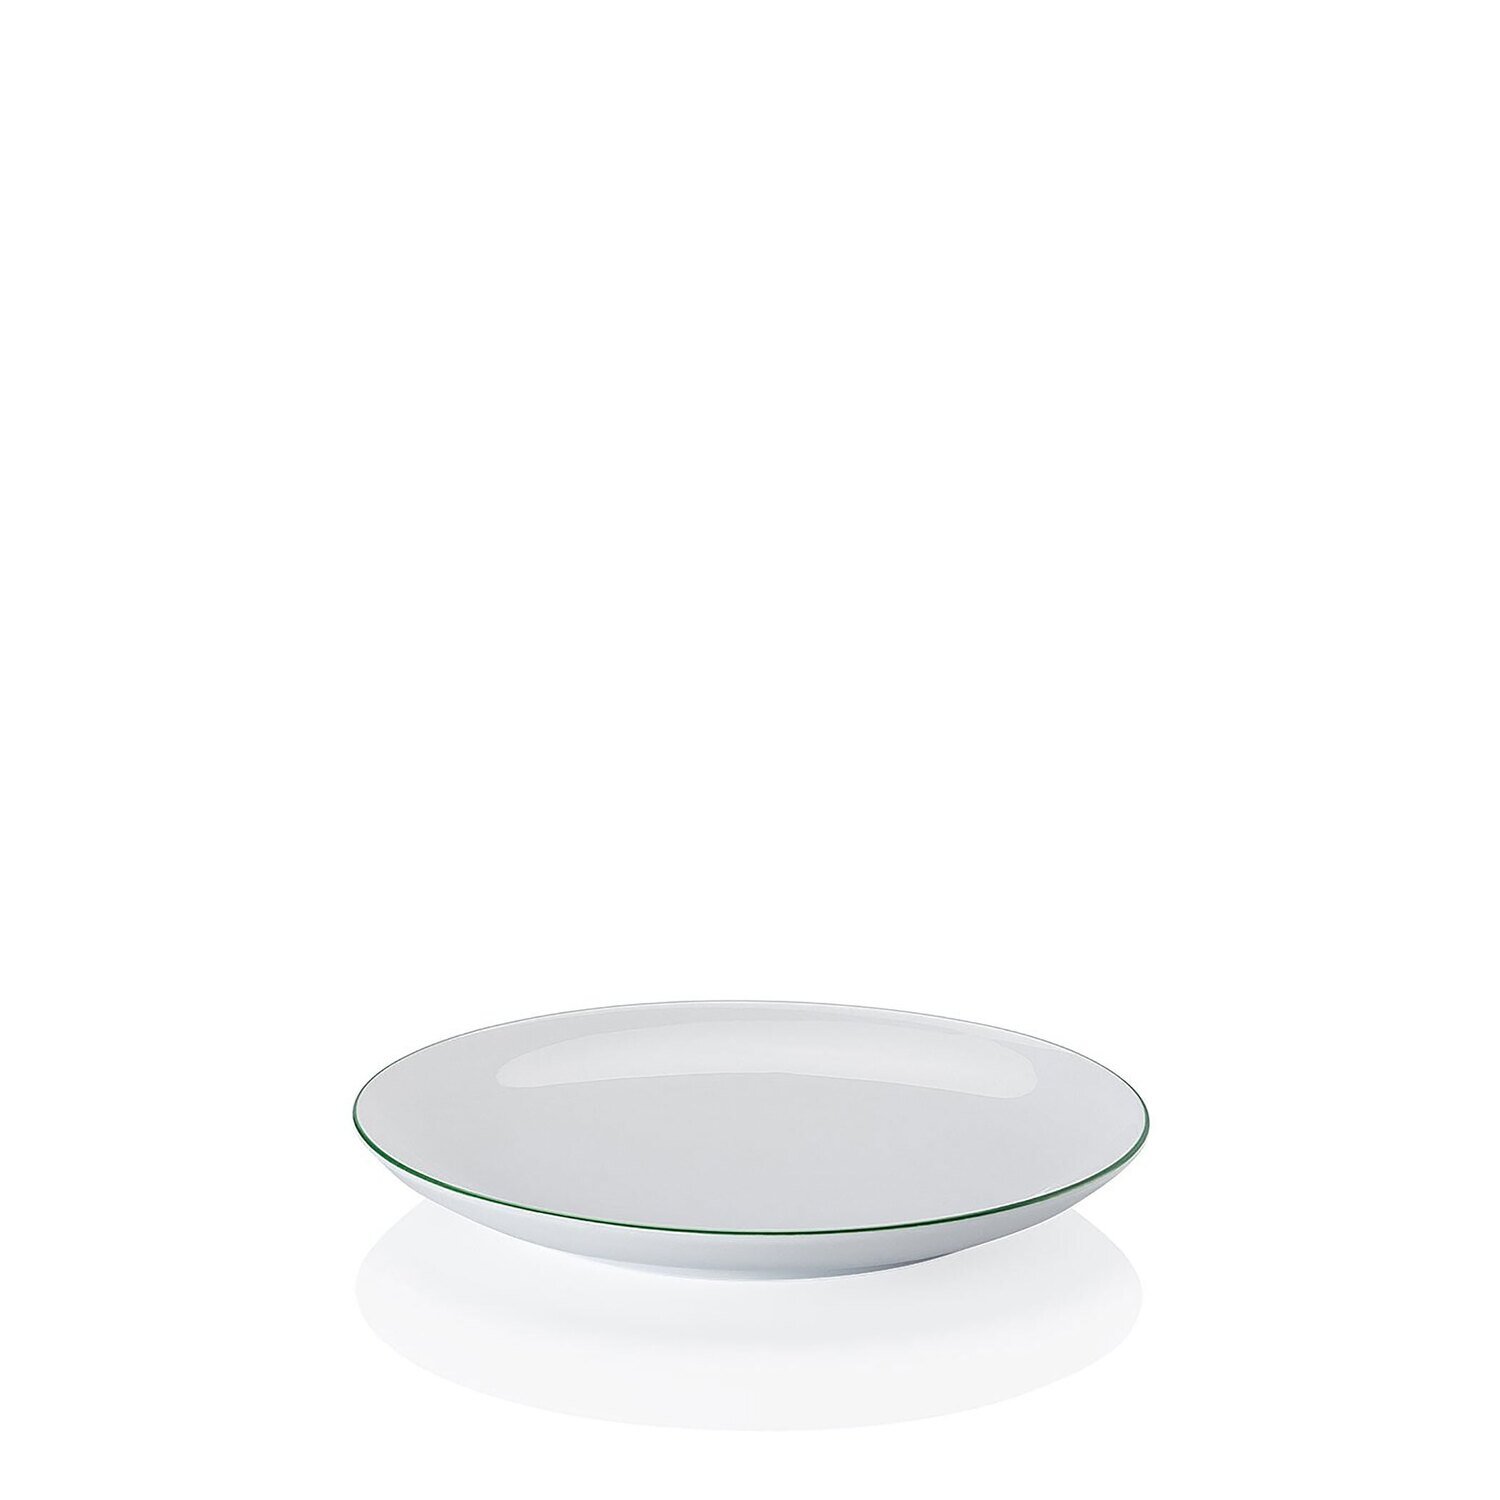 Arzberg Cucina Basic Colori Green Plate 20 Cm